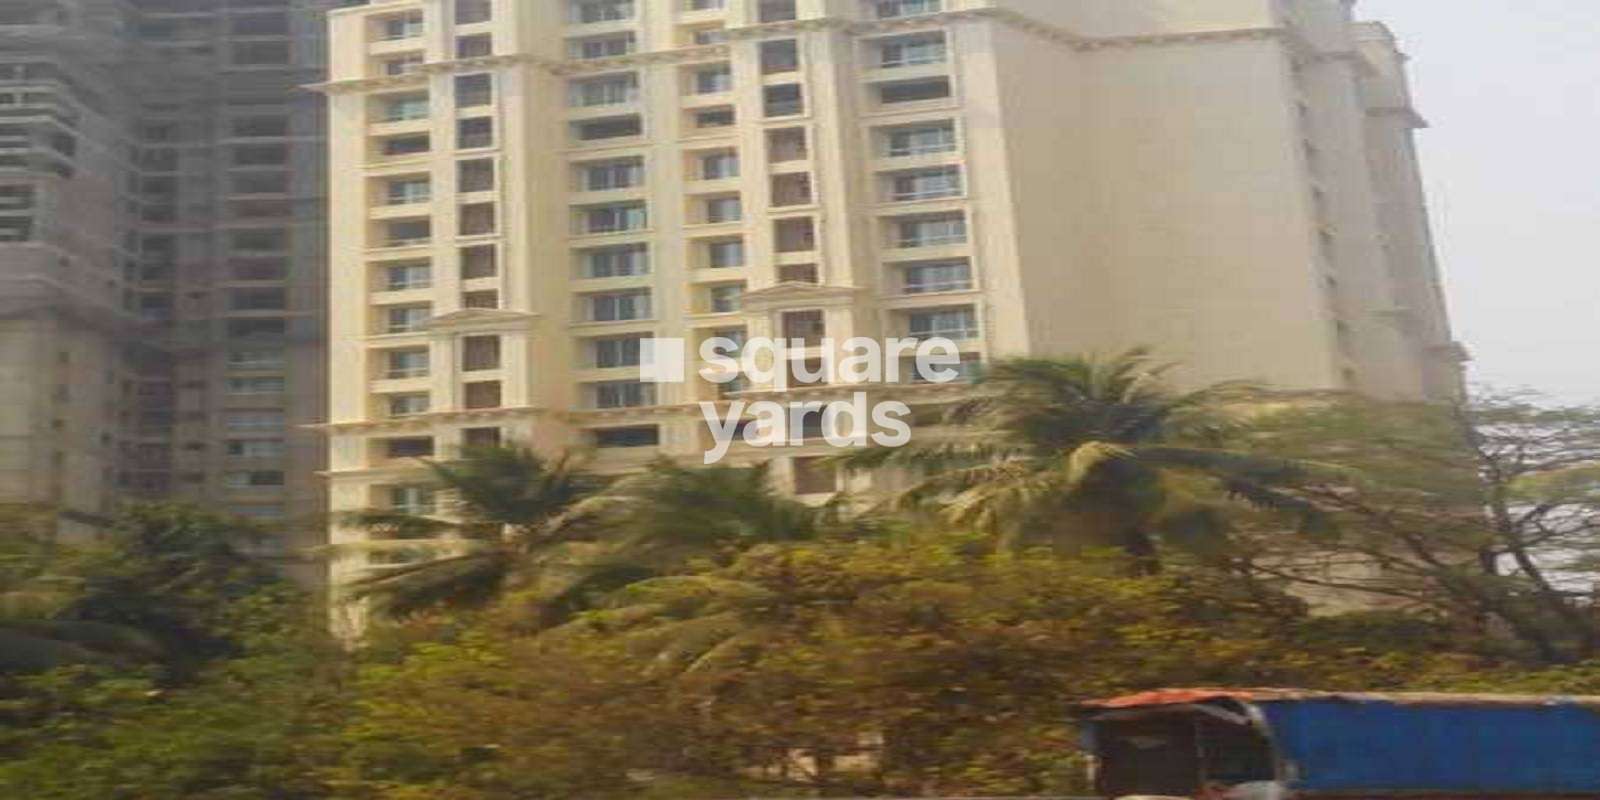 Raj Hansh Apartment Cover Image